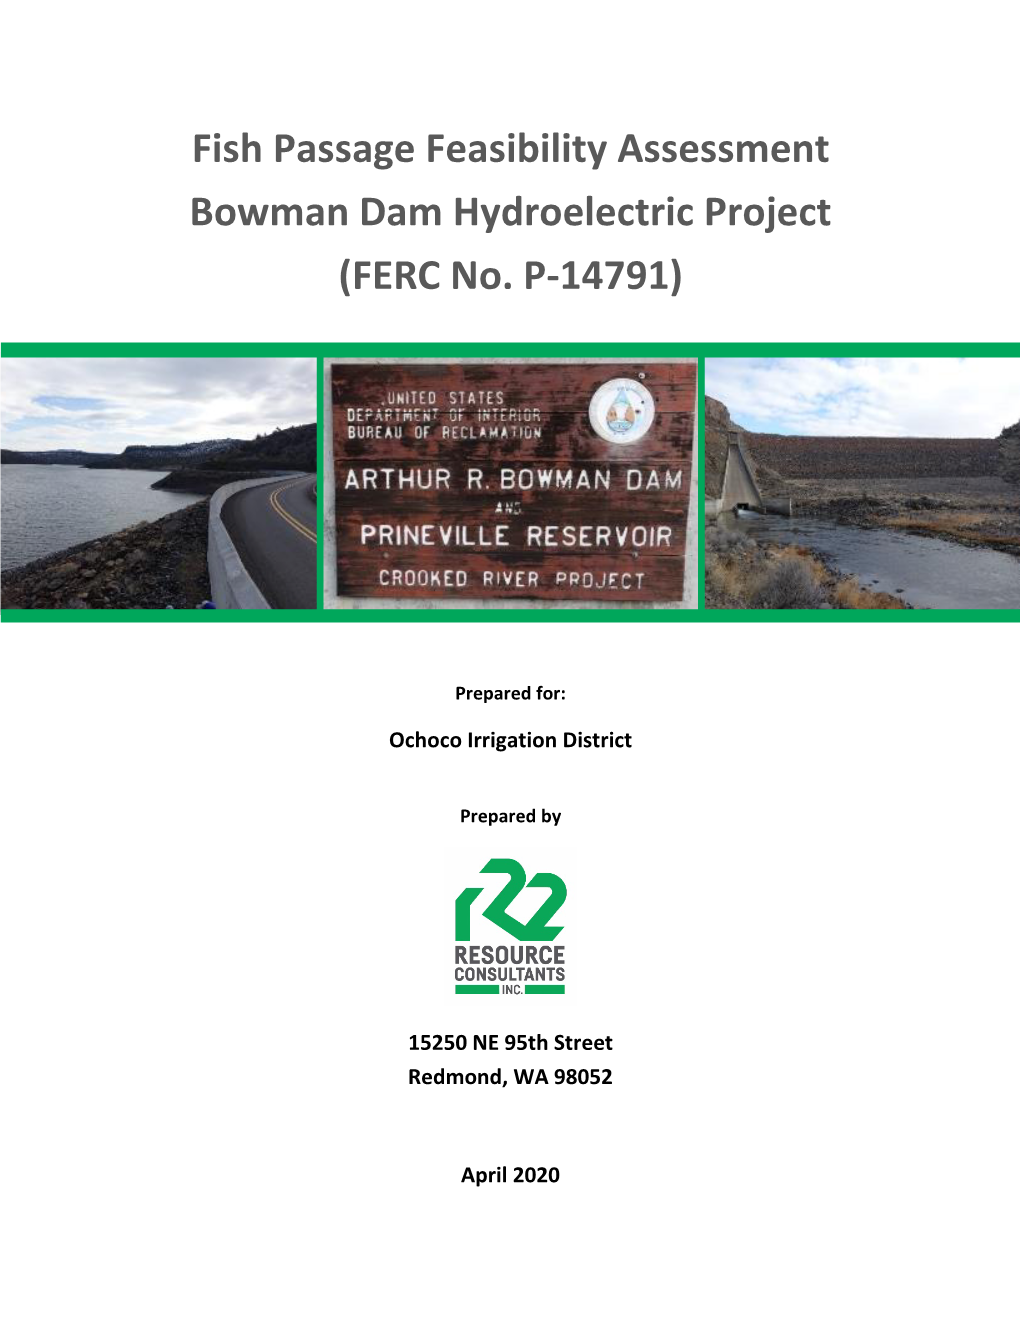 Fish Passage Feasibility Assessment Bowman Dam Hydroelectric Project (FERC No